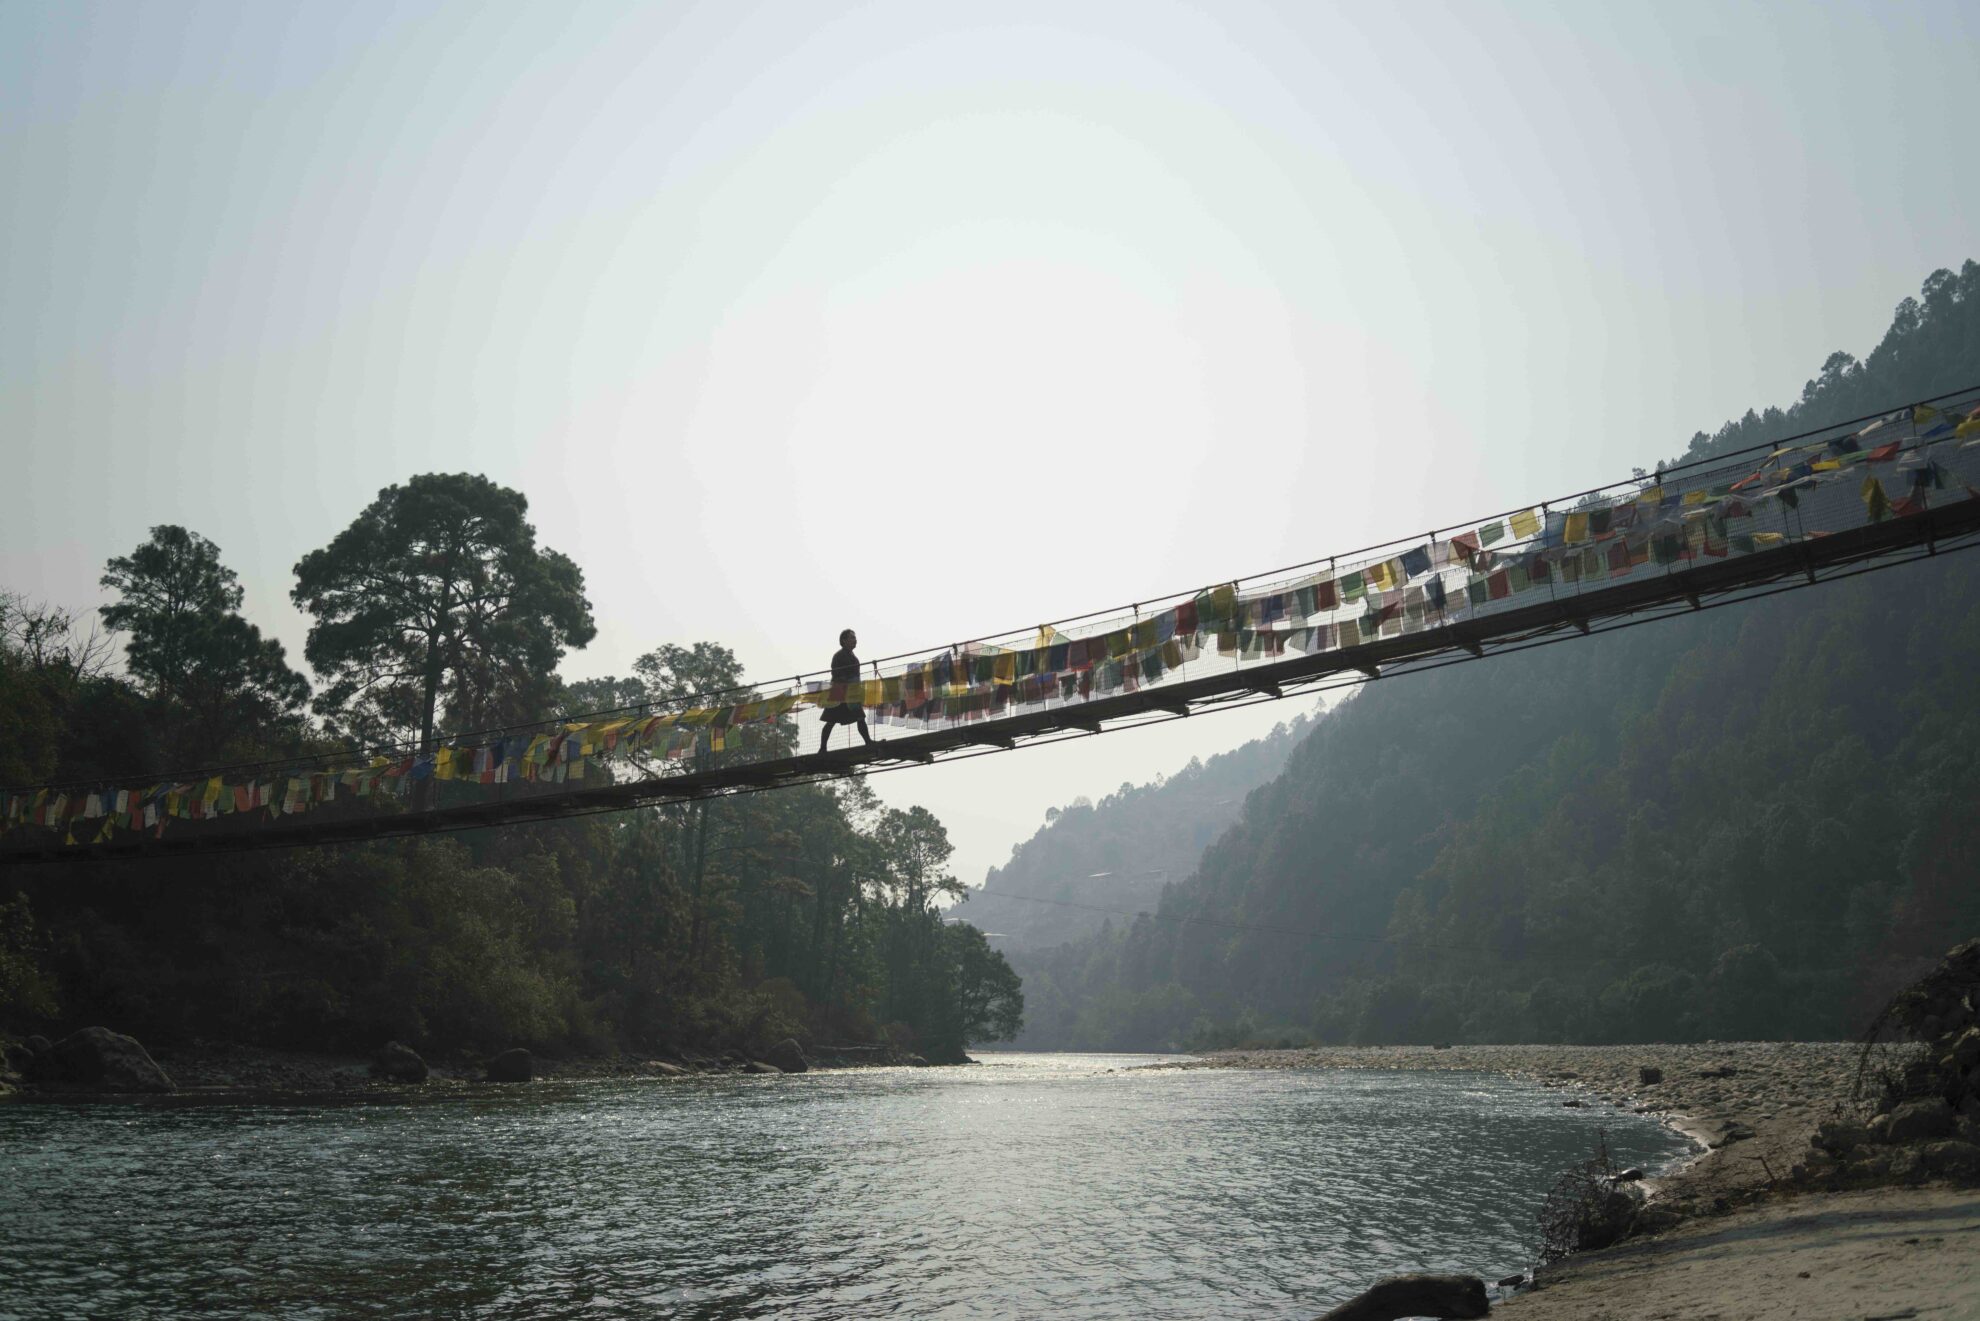 Amankora, Bhutan – Punakha lodge, Mo Chhu River lodge suspension bridg